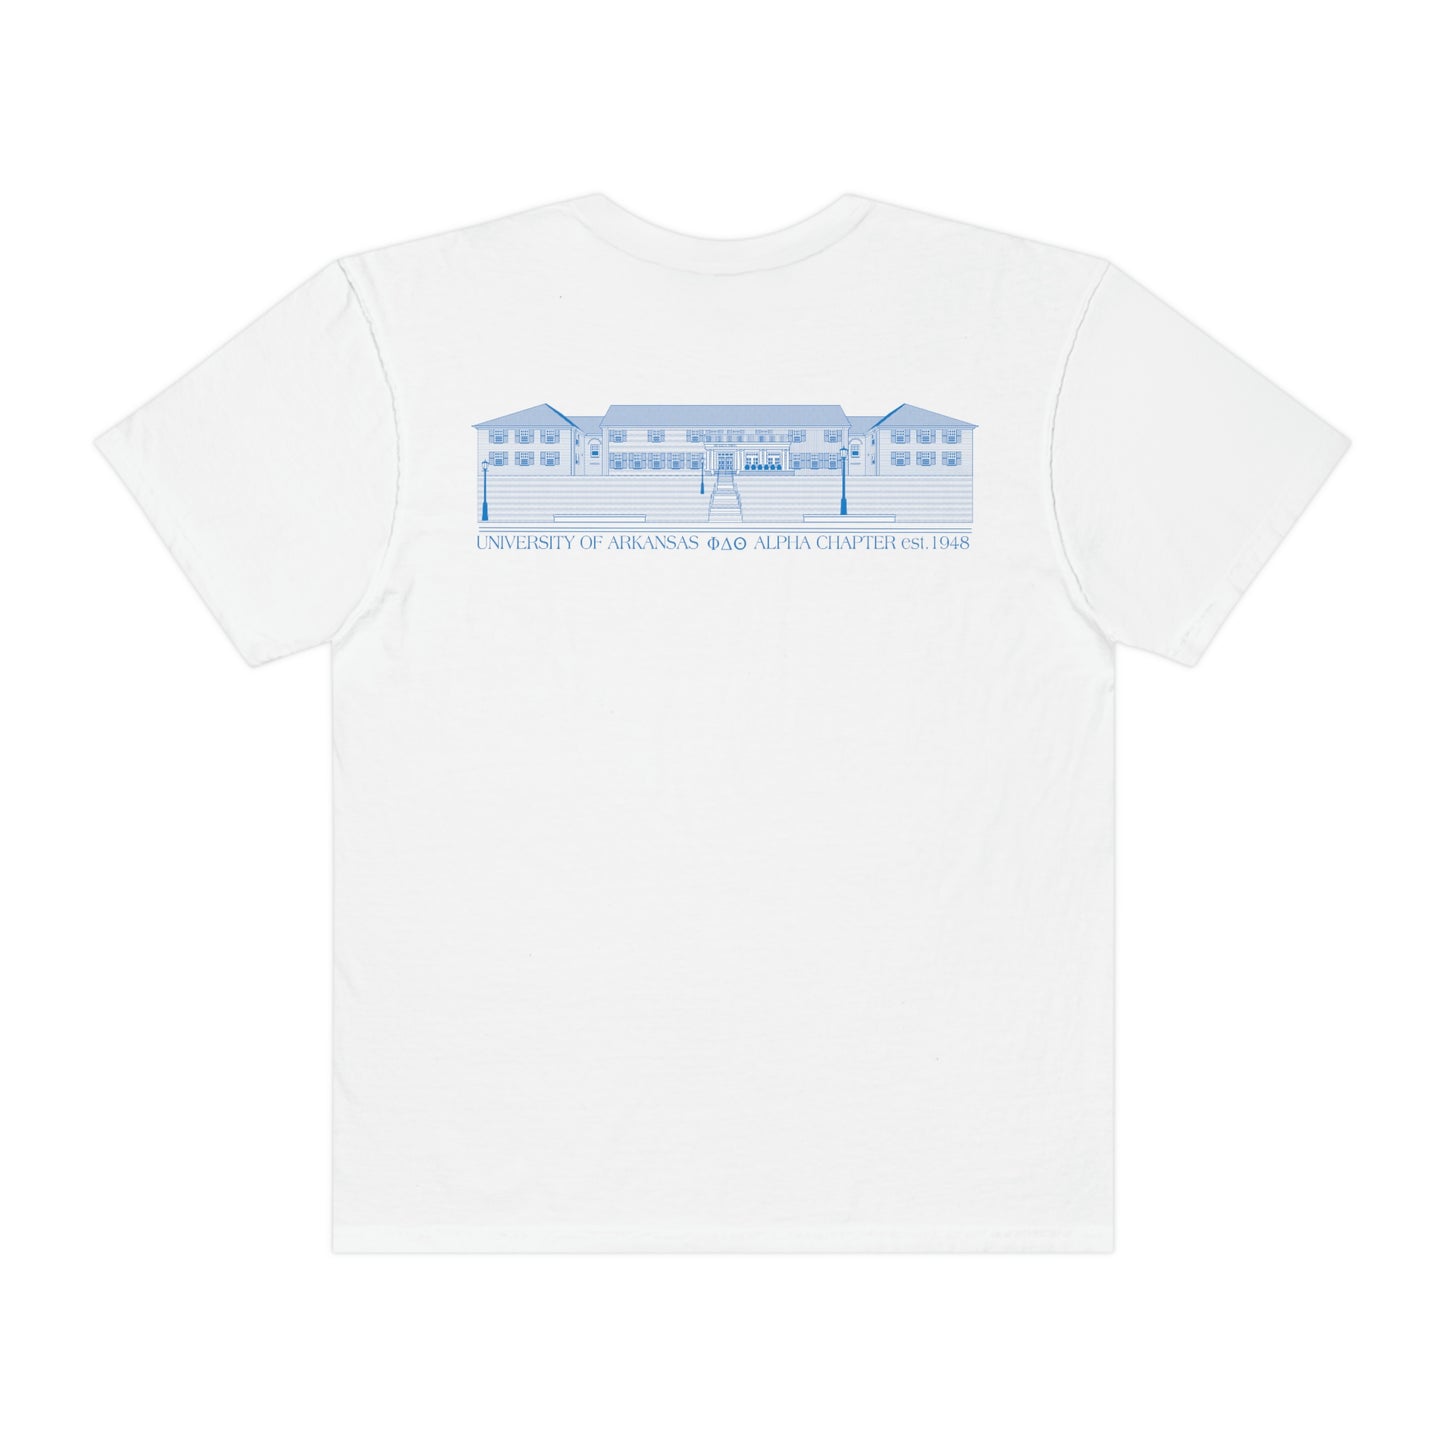 Phi Delt AR House Garment-Dyed T-shirt